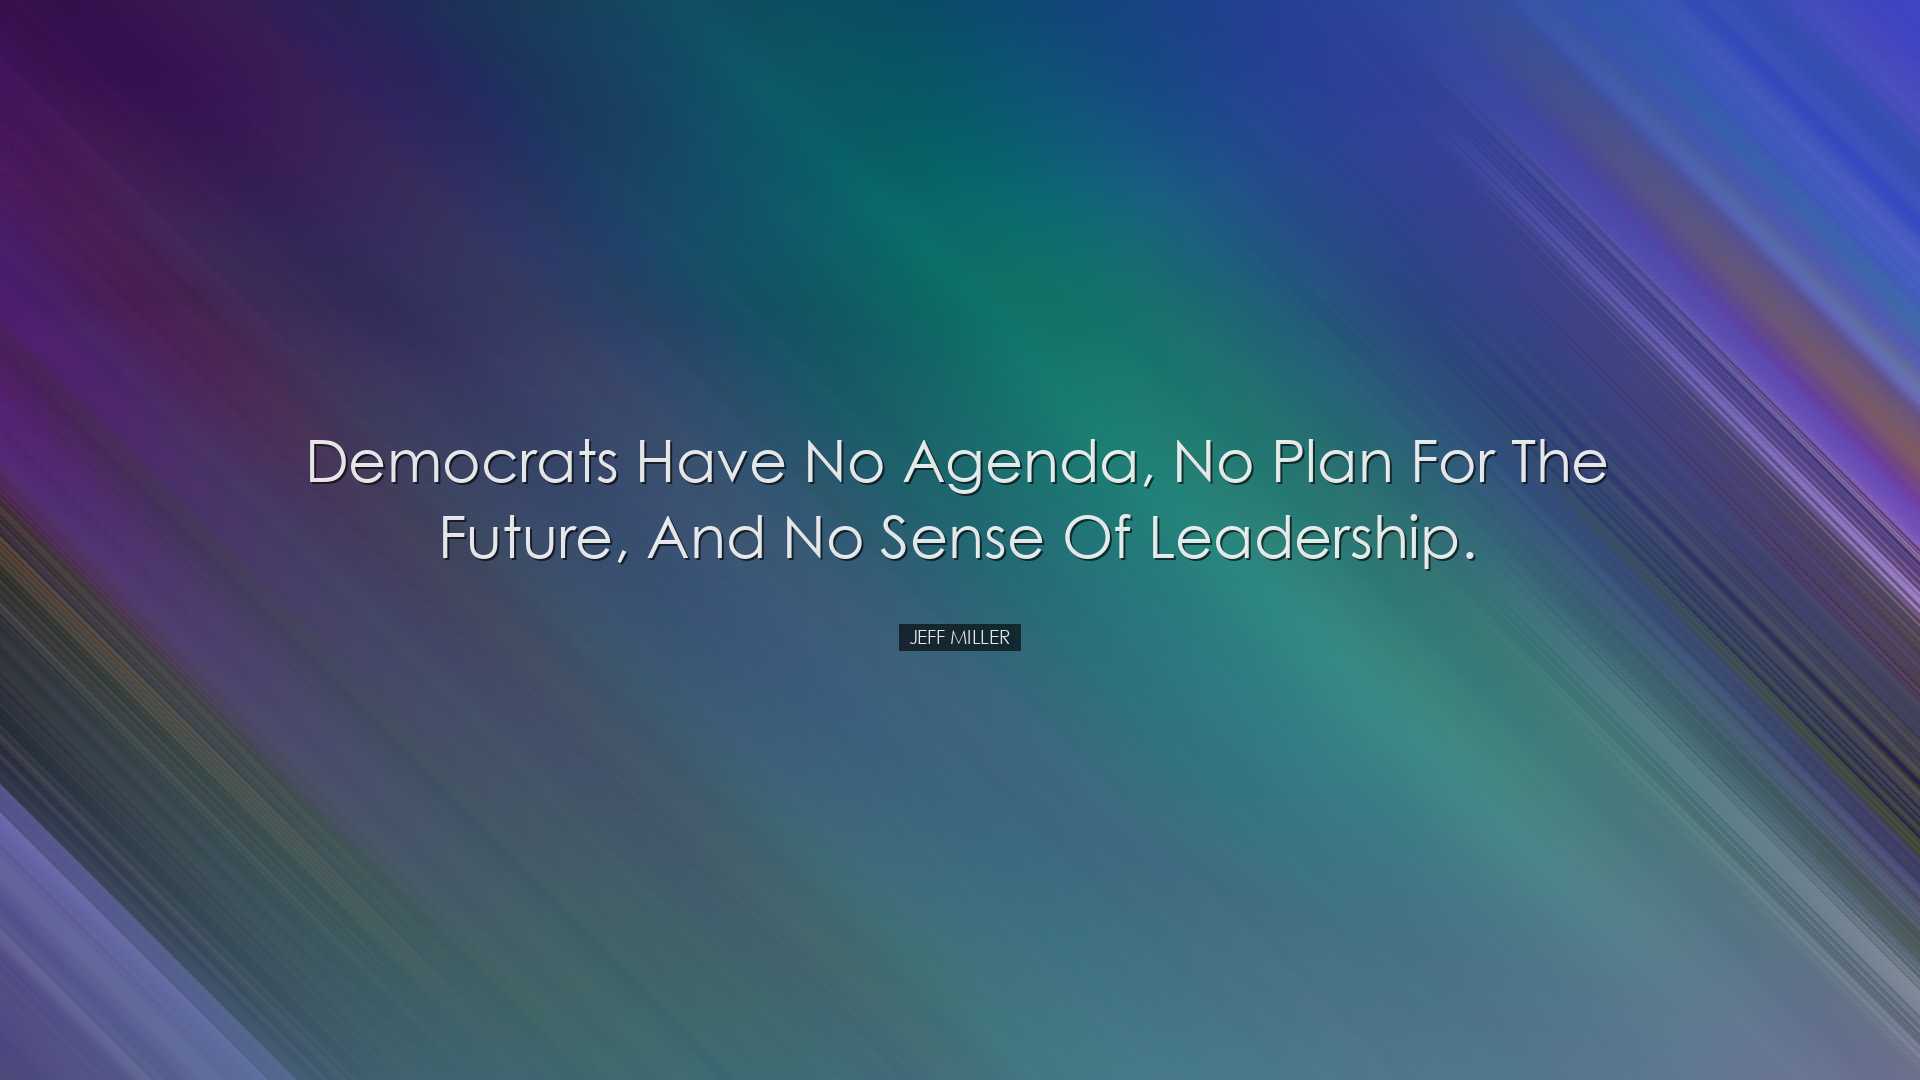 Democrats have no agenda, no plan for the future, and no sense of